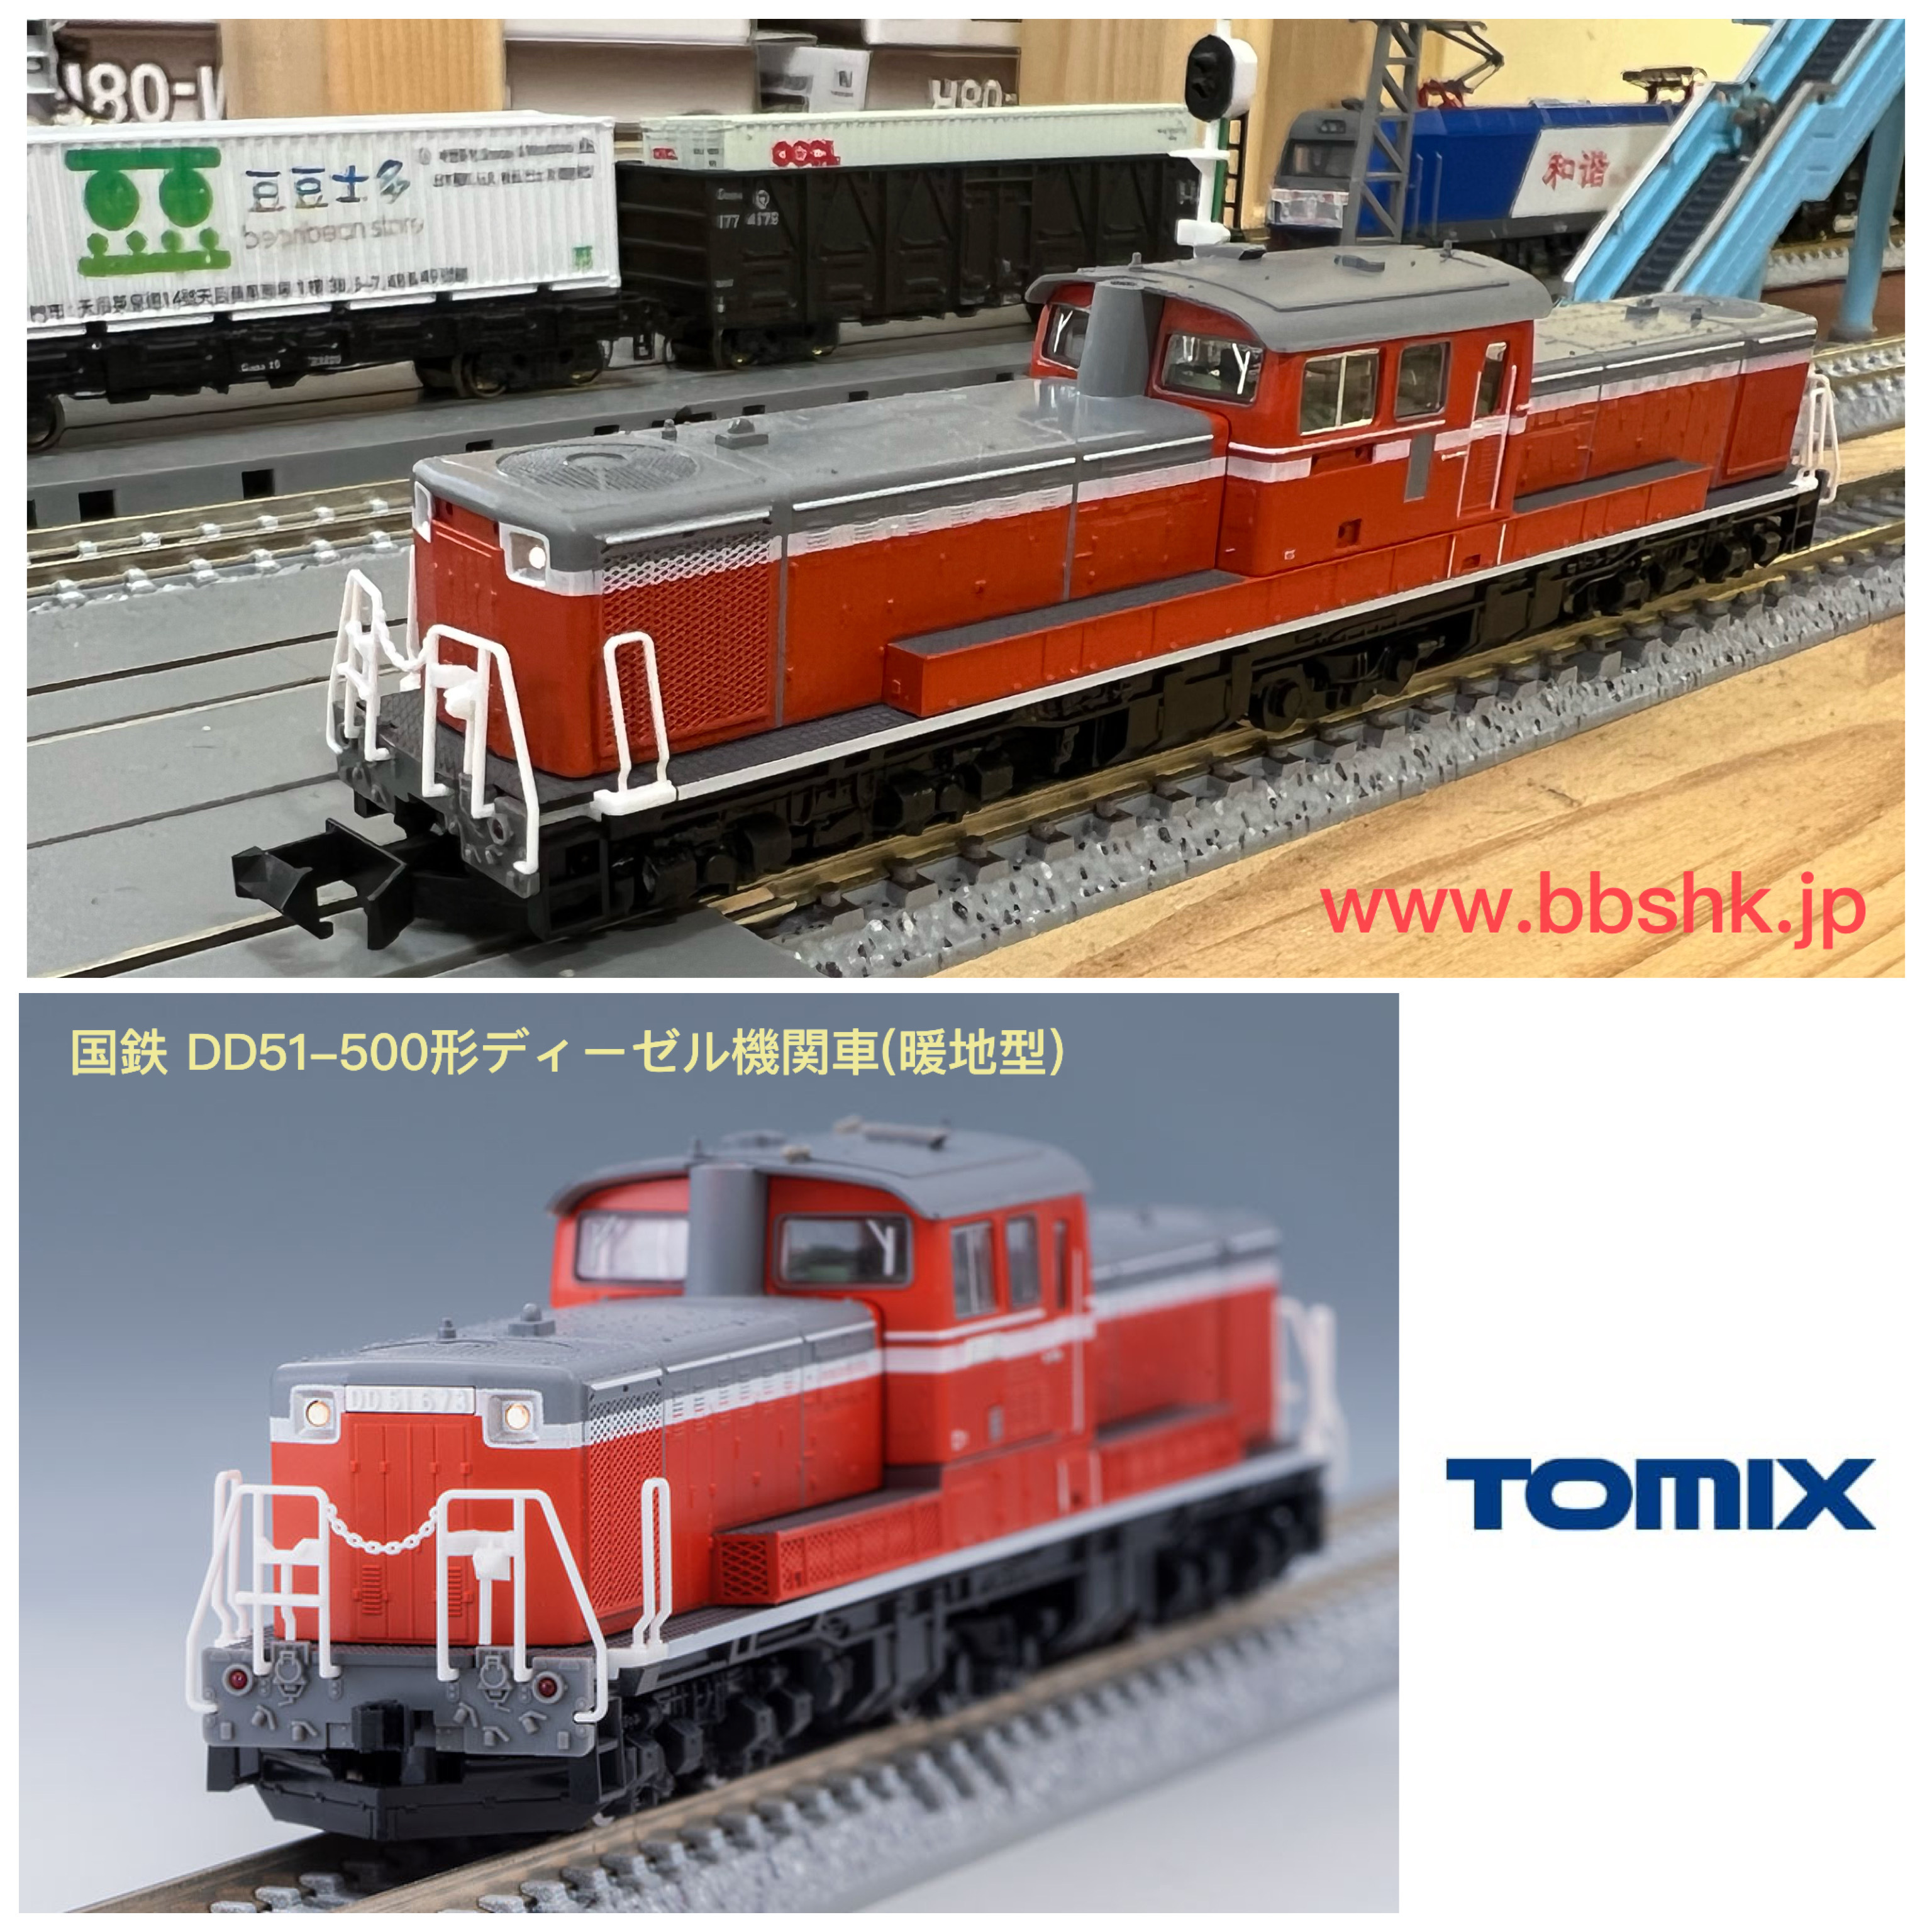 TOMIX 2245 国鉄 DD51-500形ディーゼル機関車 (暖地型)